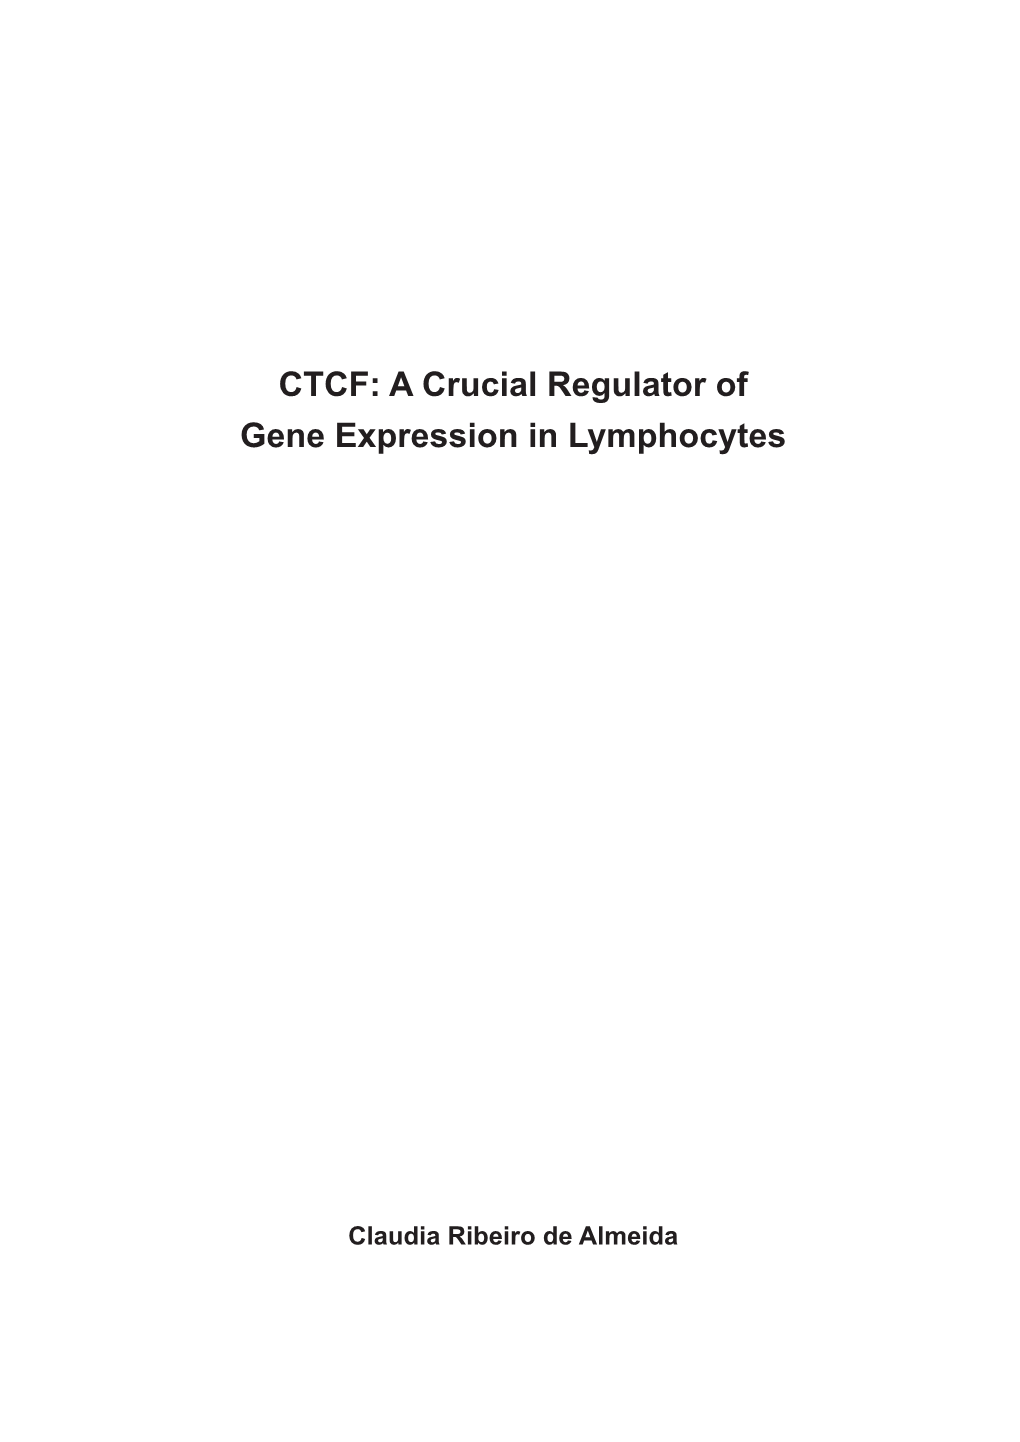 CTCF: a Crucial Regulator of Gene Expression in Lymphocytes